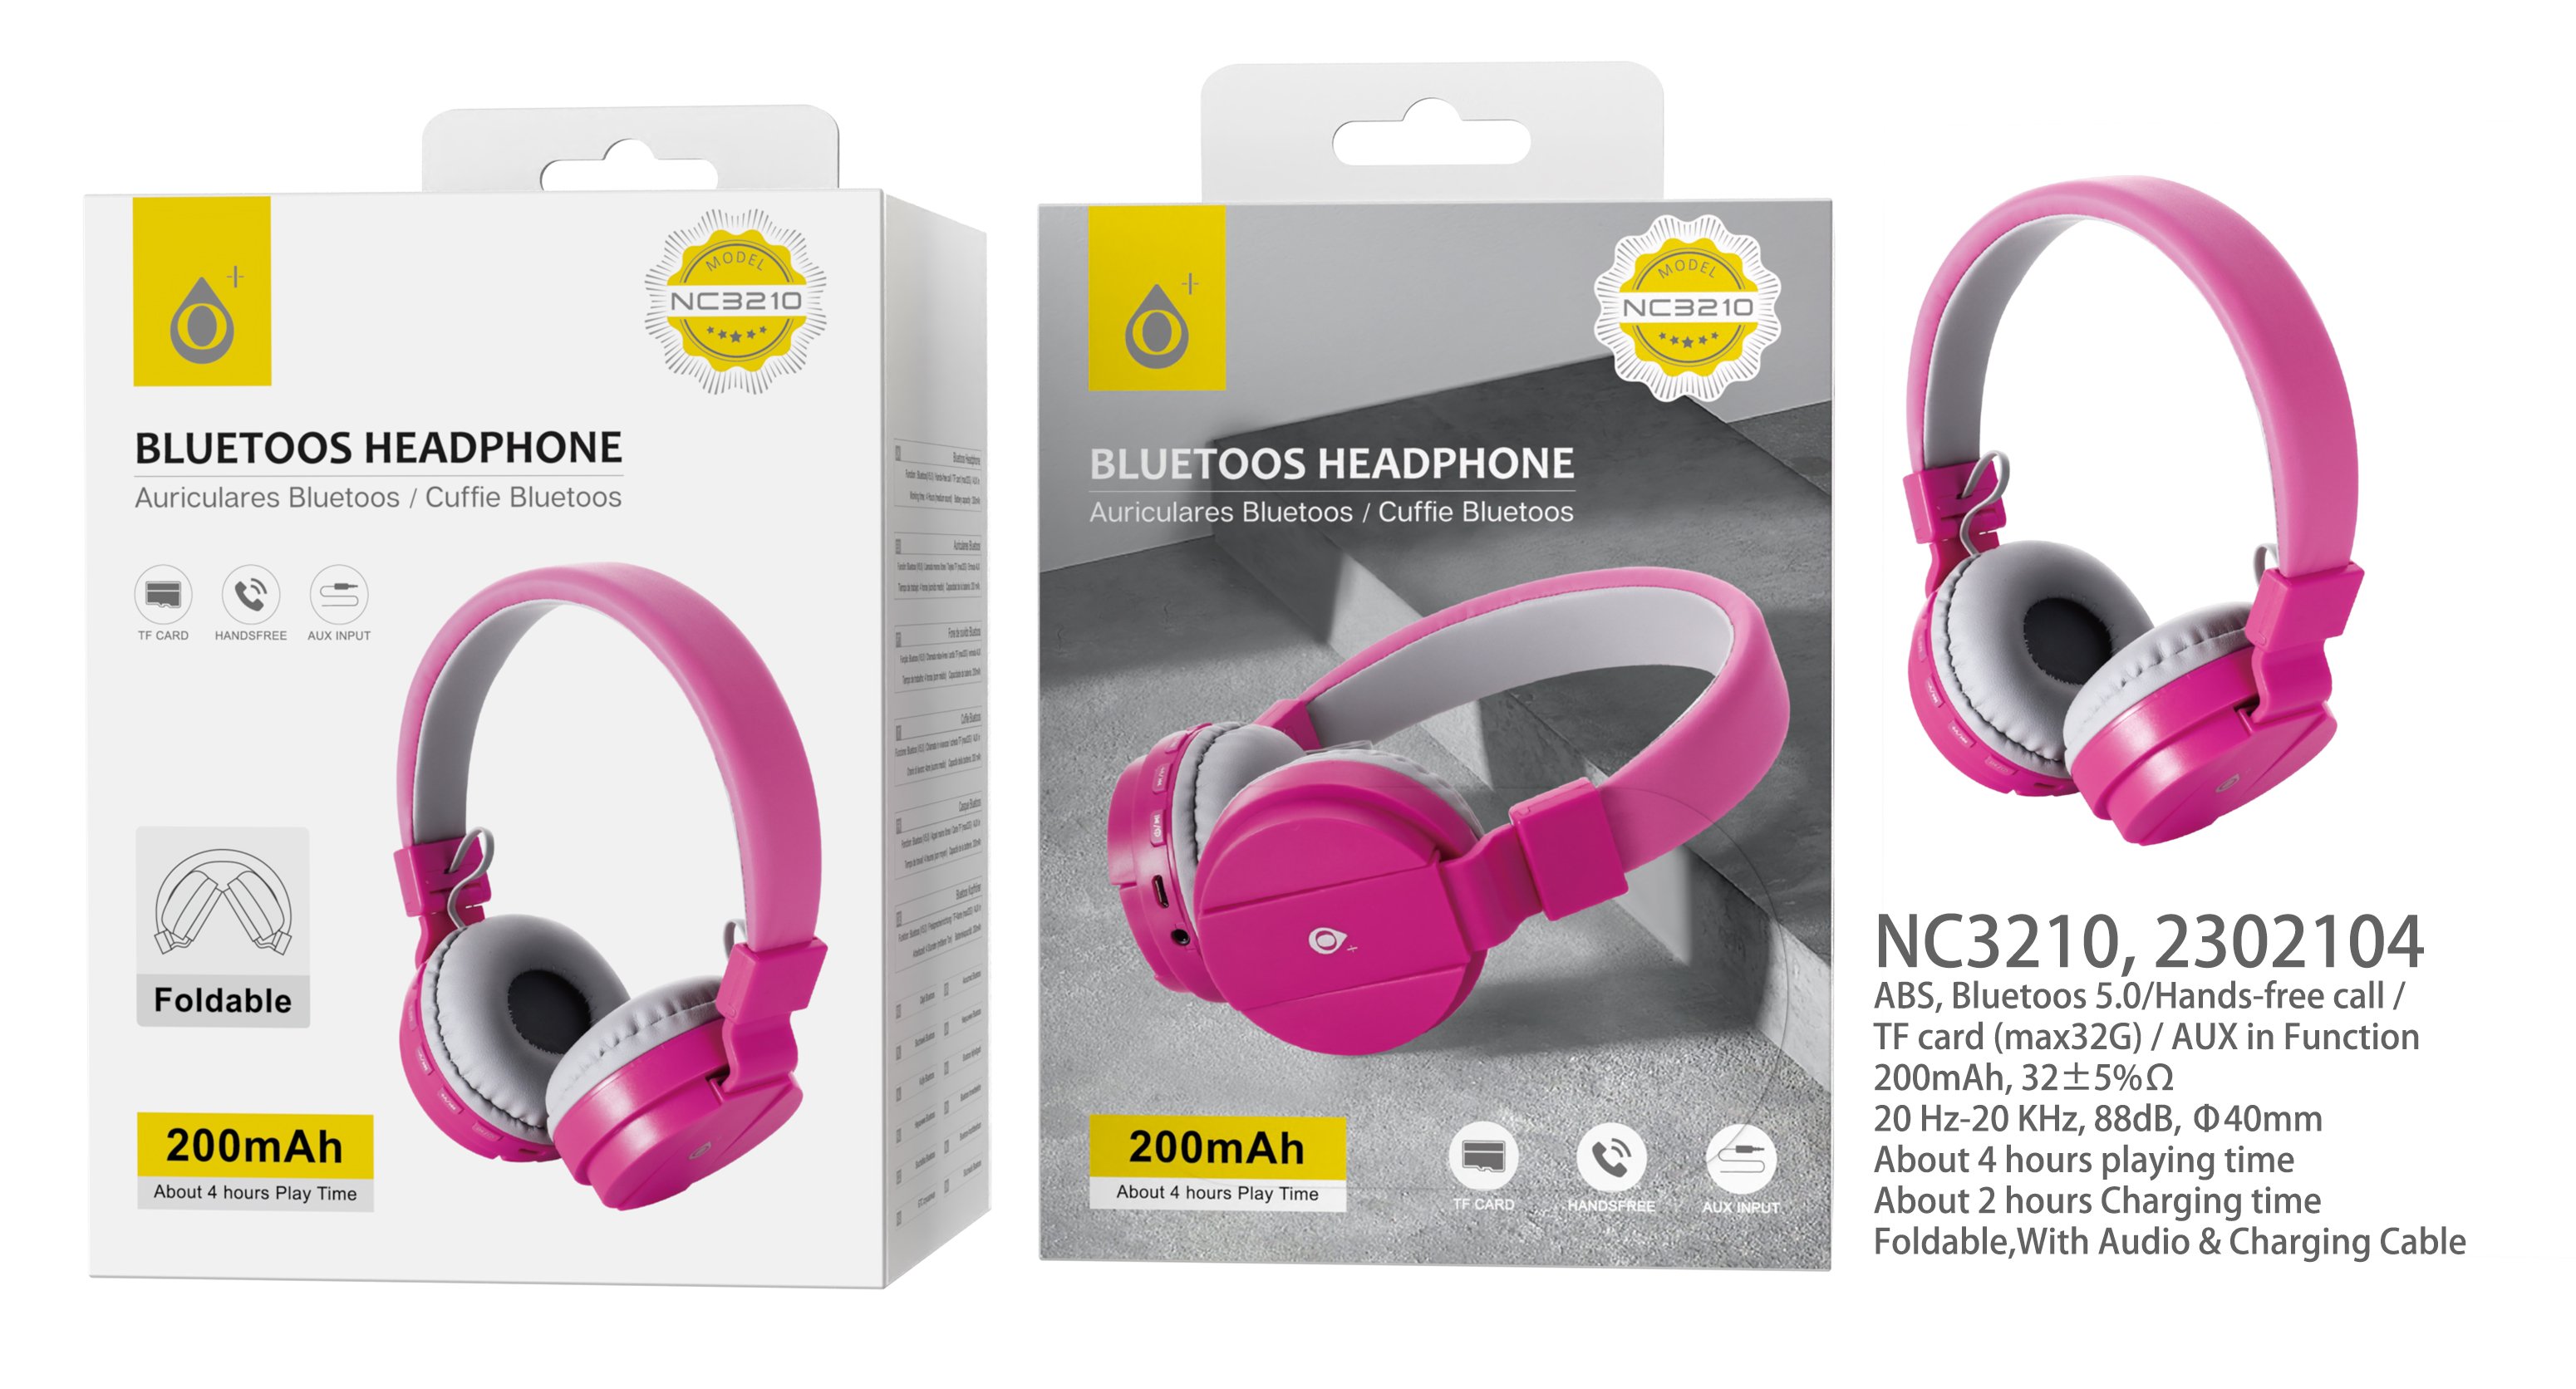 NC3210 RS Auriculares Casco  Bluetooth 5.0 Plegable, Manos libres para llamadas  , Bateria 200mAh, T